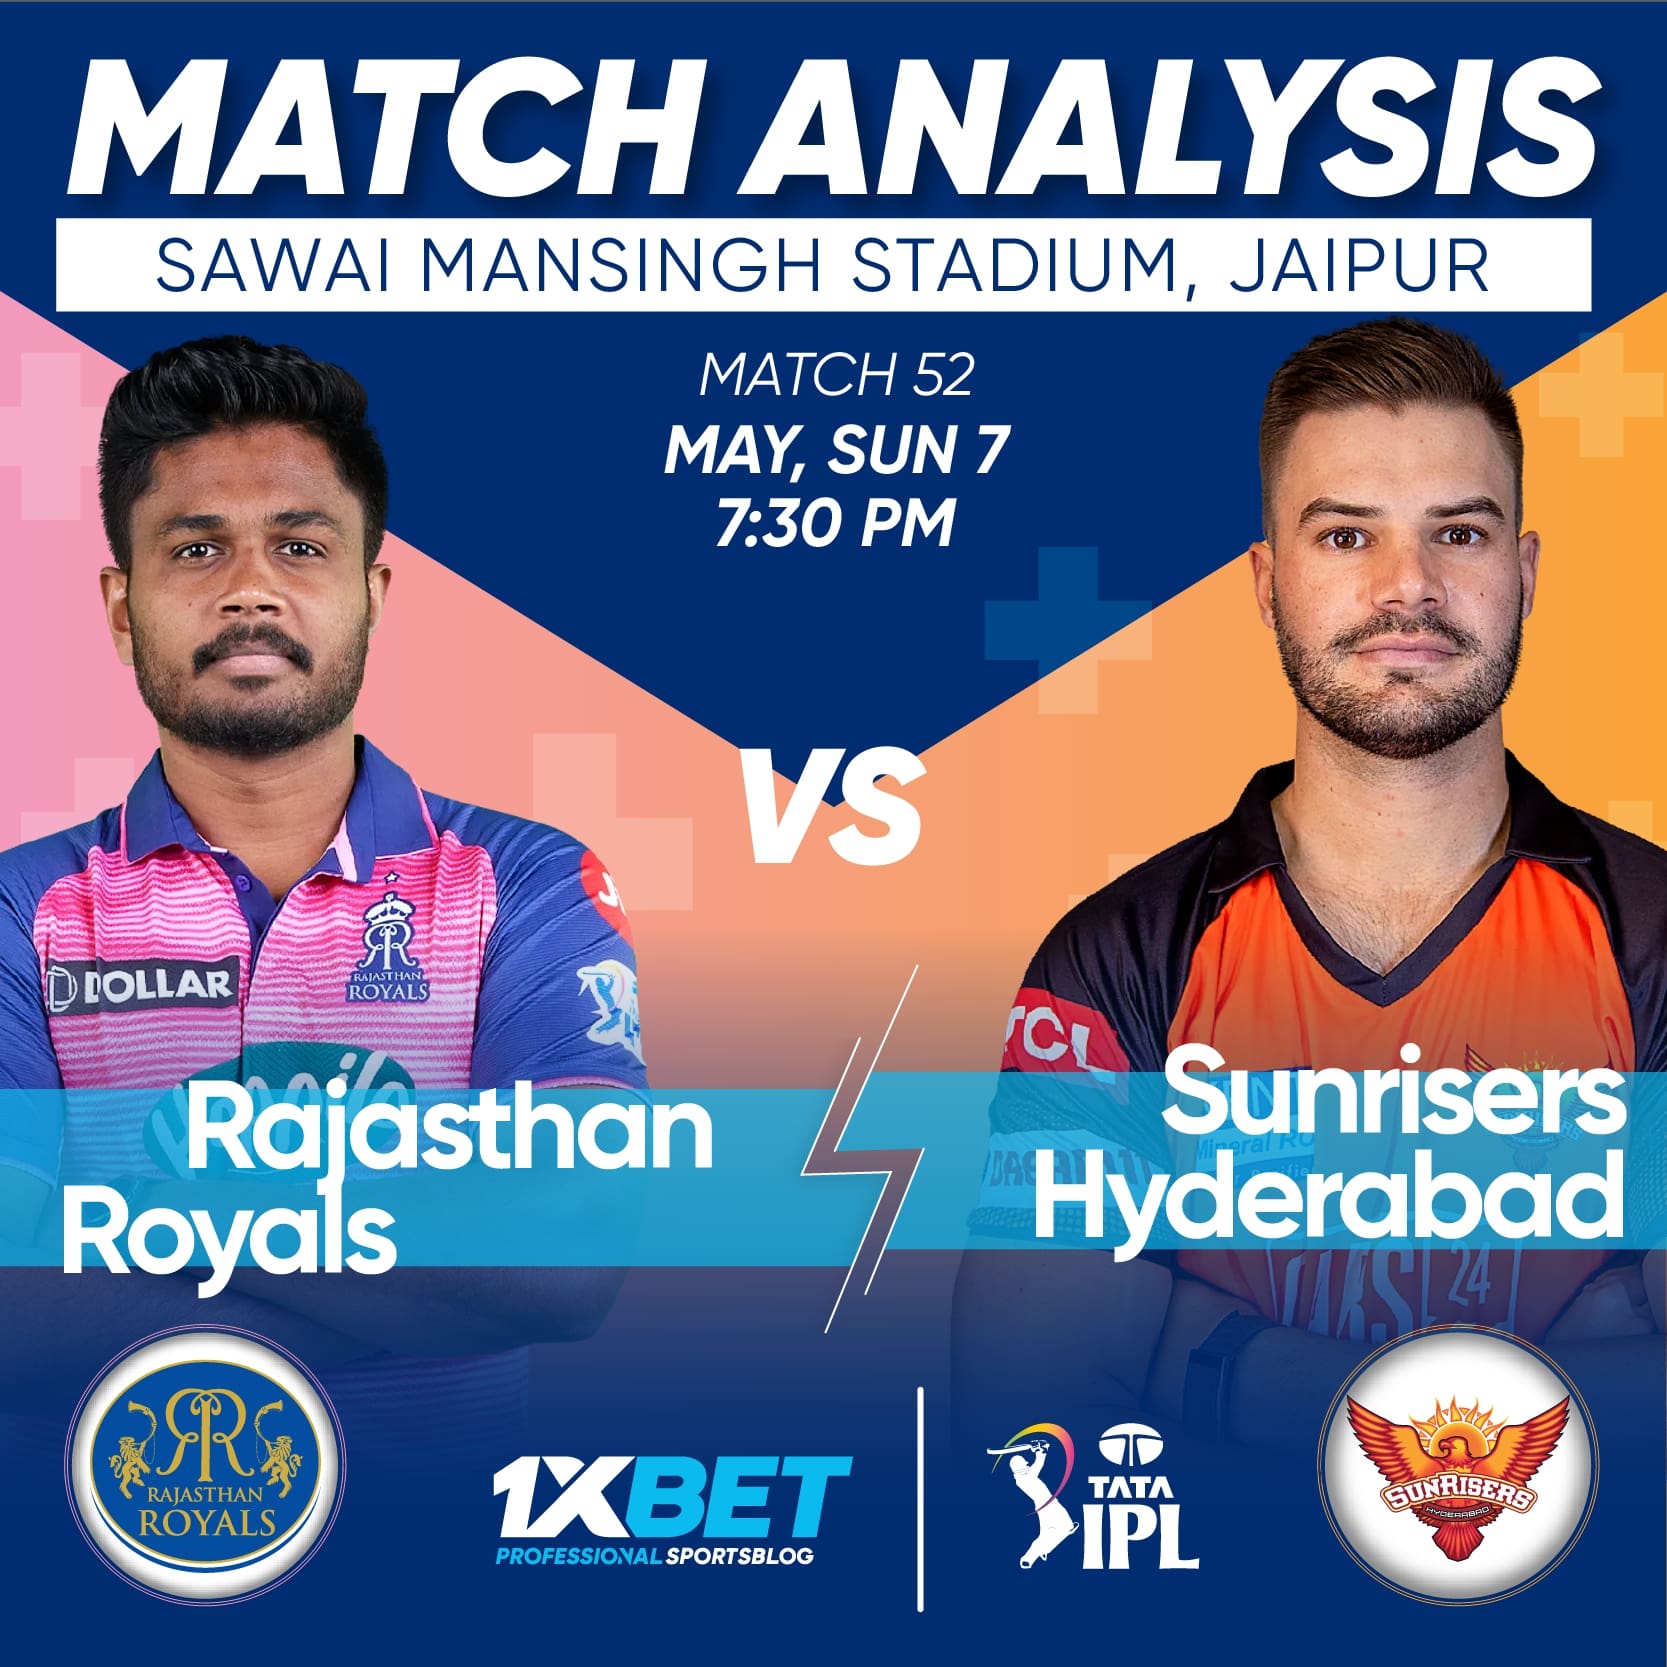 Rajasthan Royals vs Sunrisers Hyderabad, IPL 2023, 52nd Match Analysis